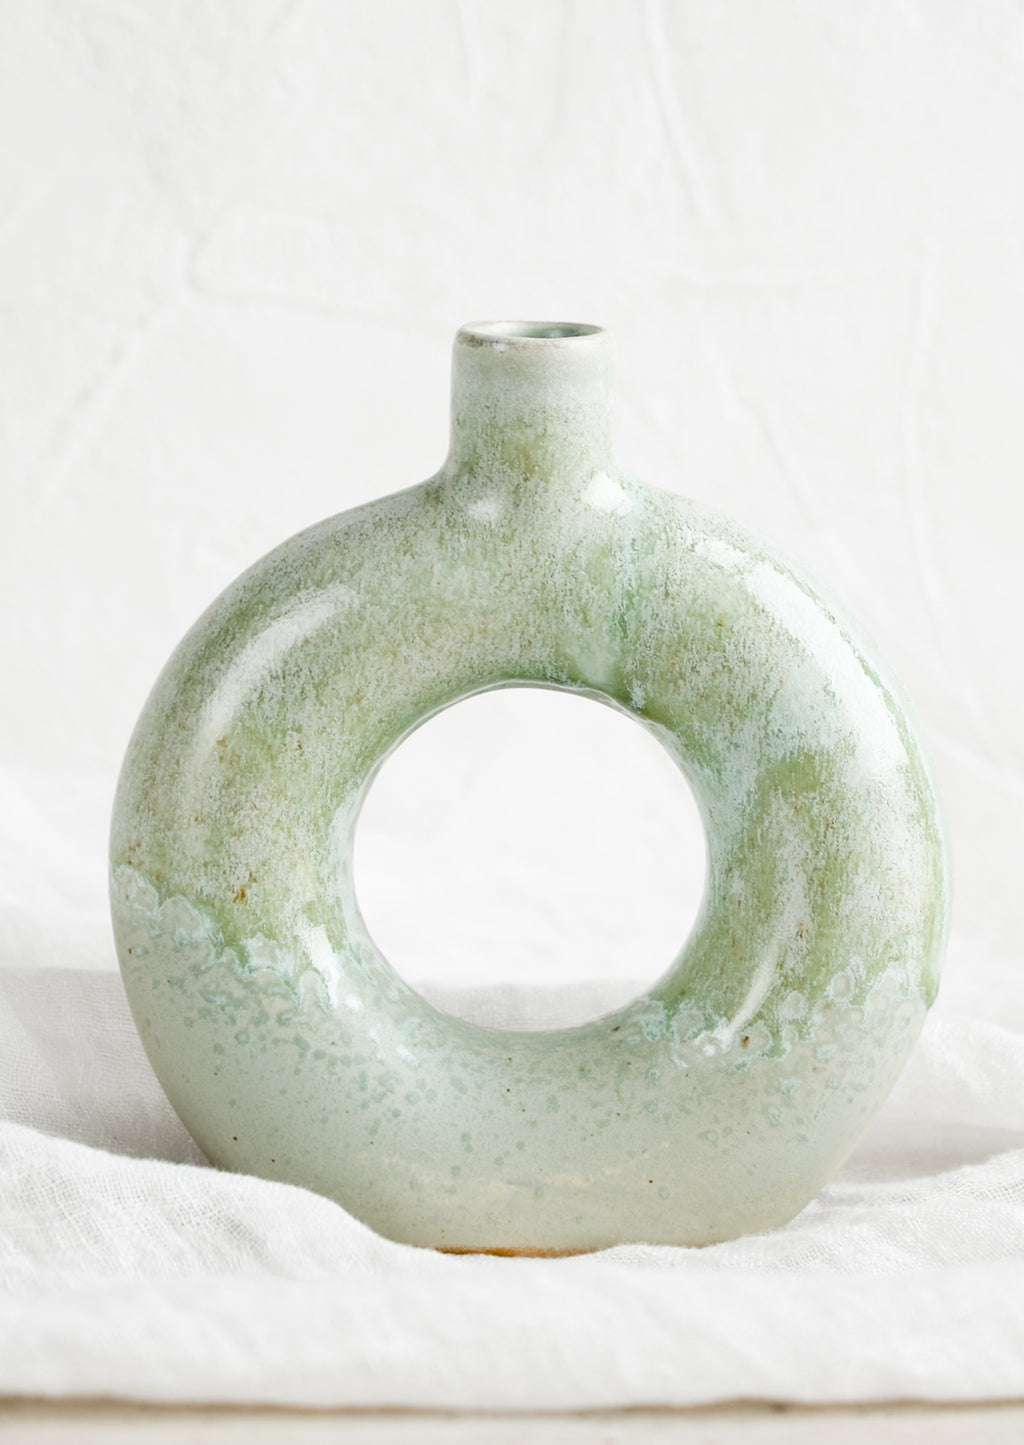 Circular: A ceramic vase in mottled aqua glaze with hollow circle shape.